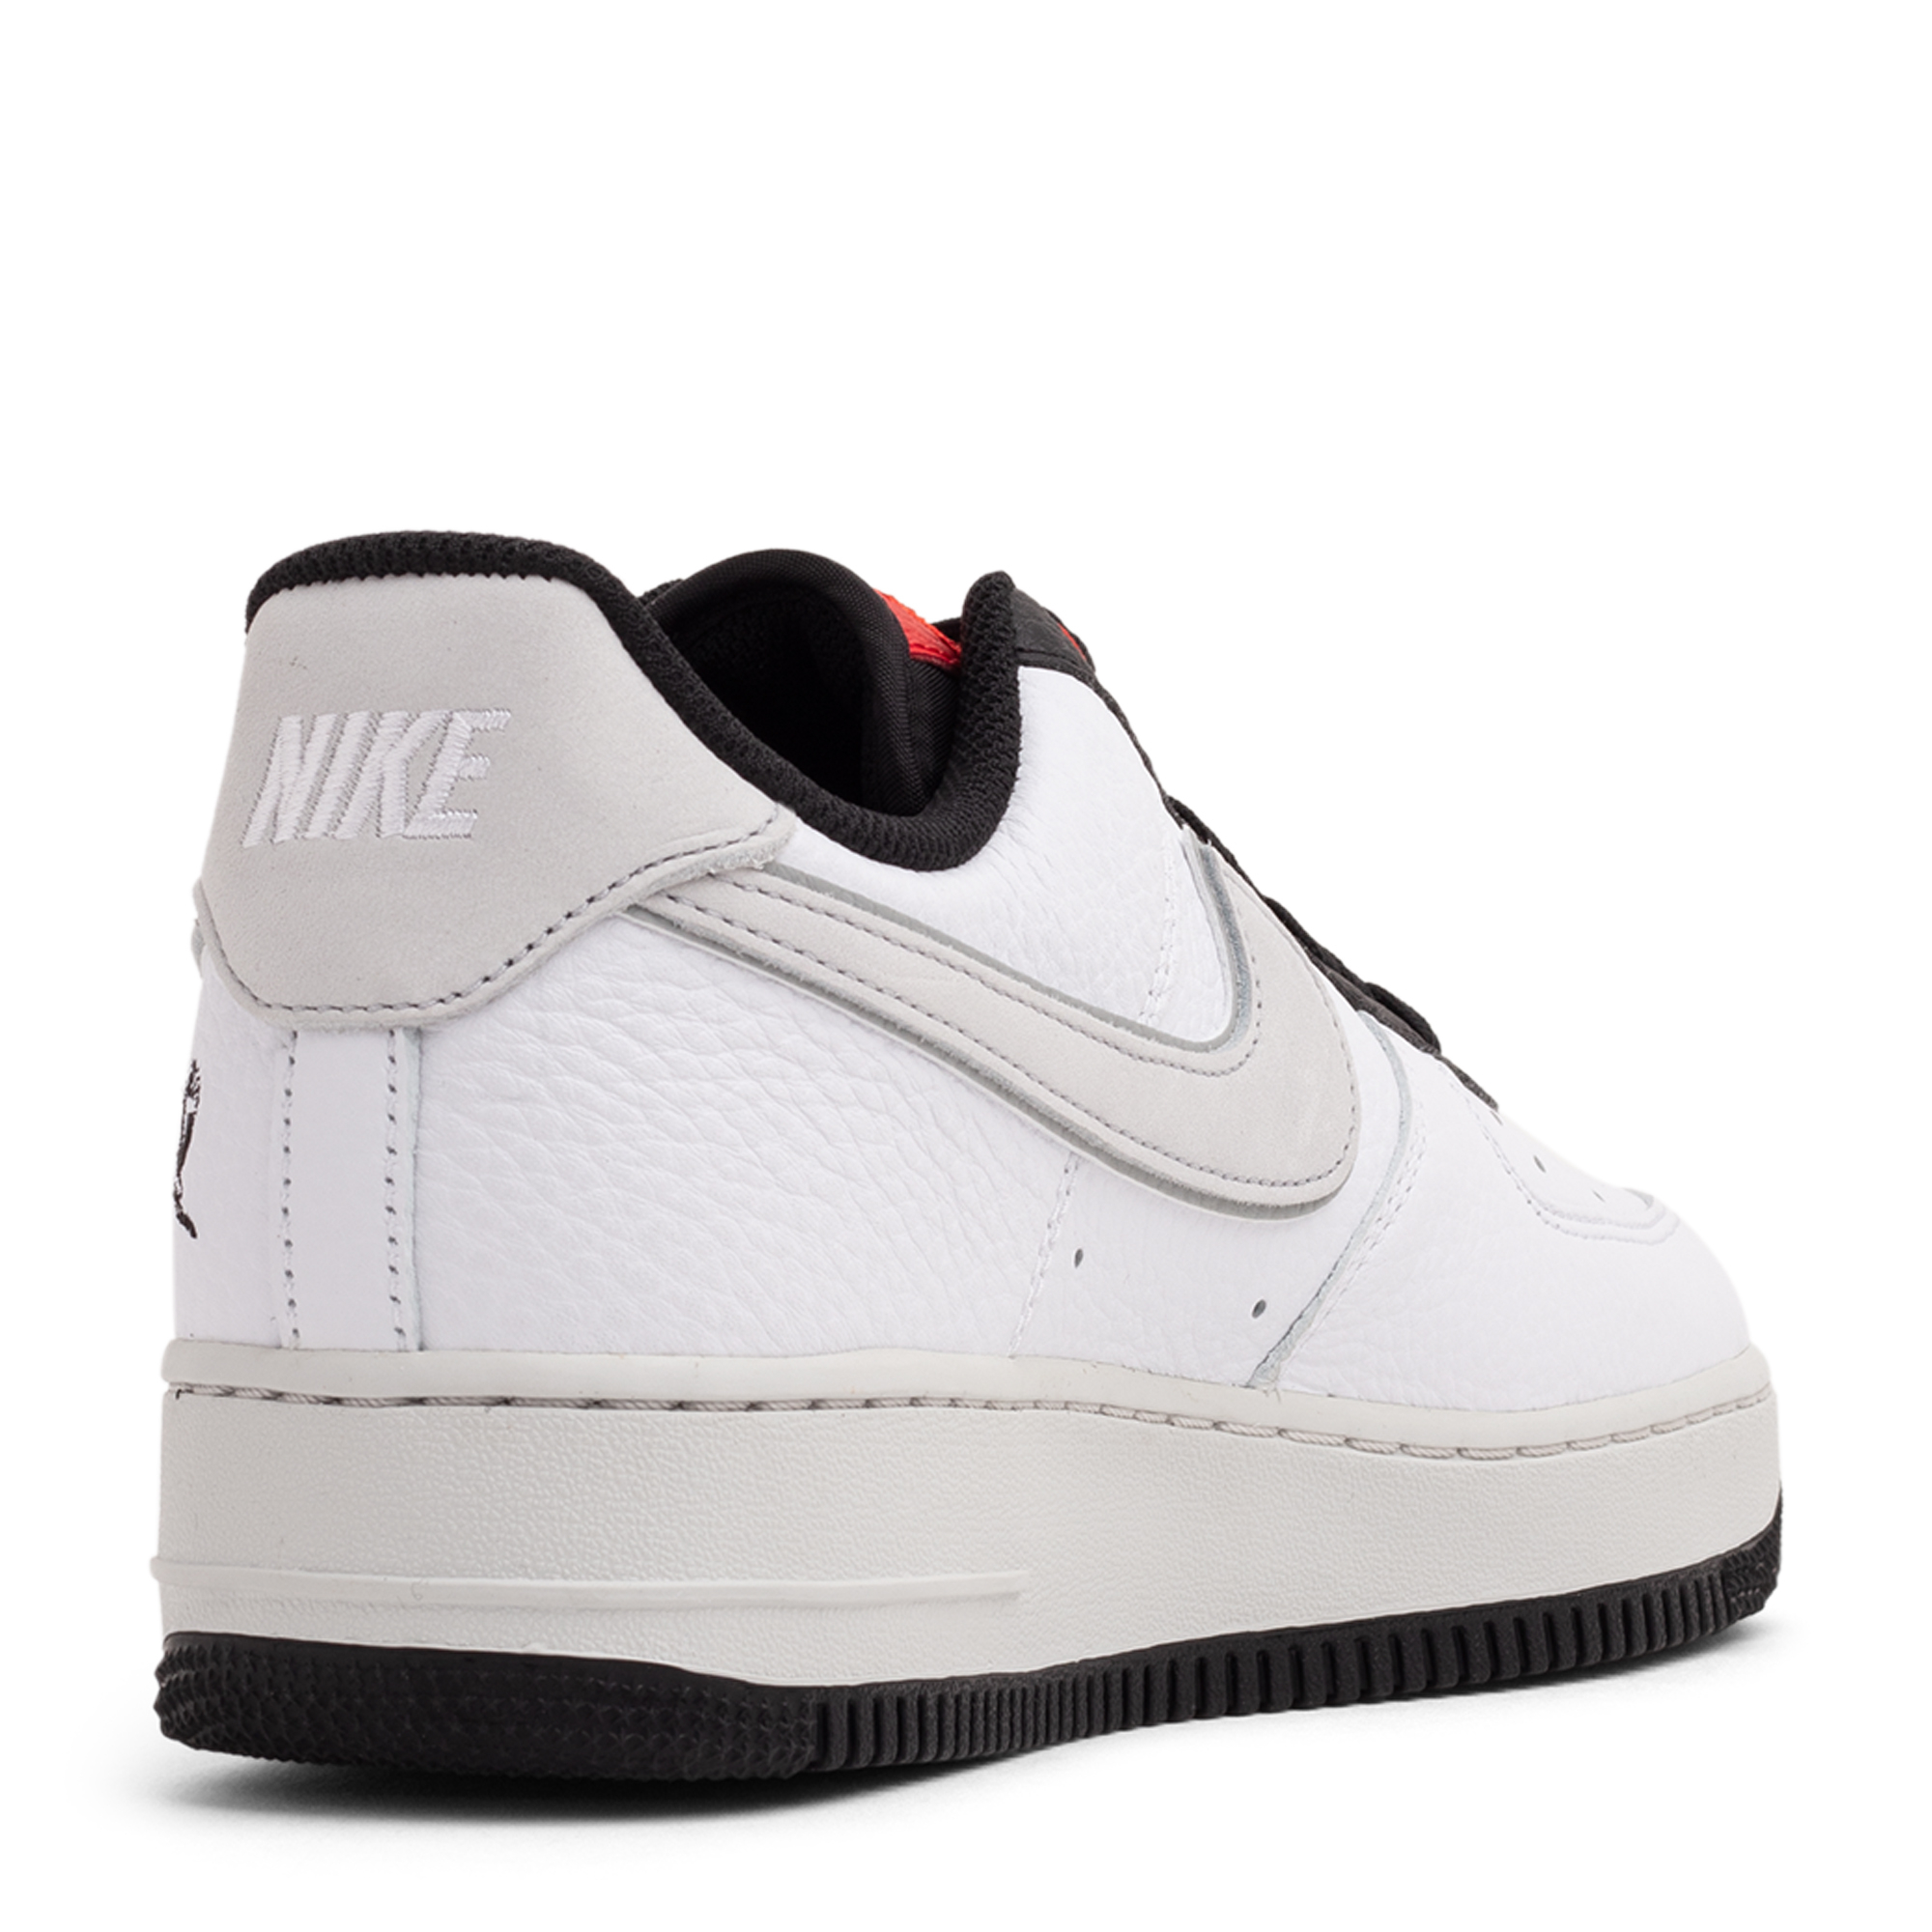 Nike Air Force 1 '07 LX Crane sneakers for Men - White in KSA 